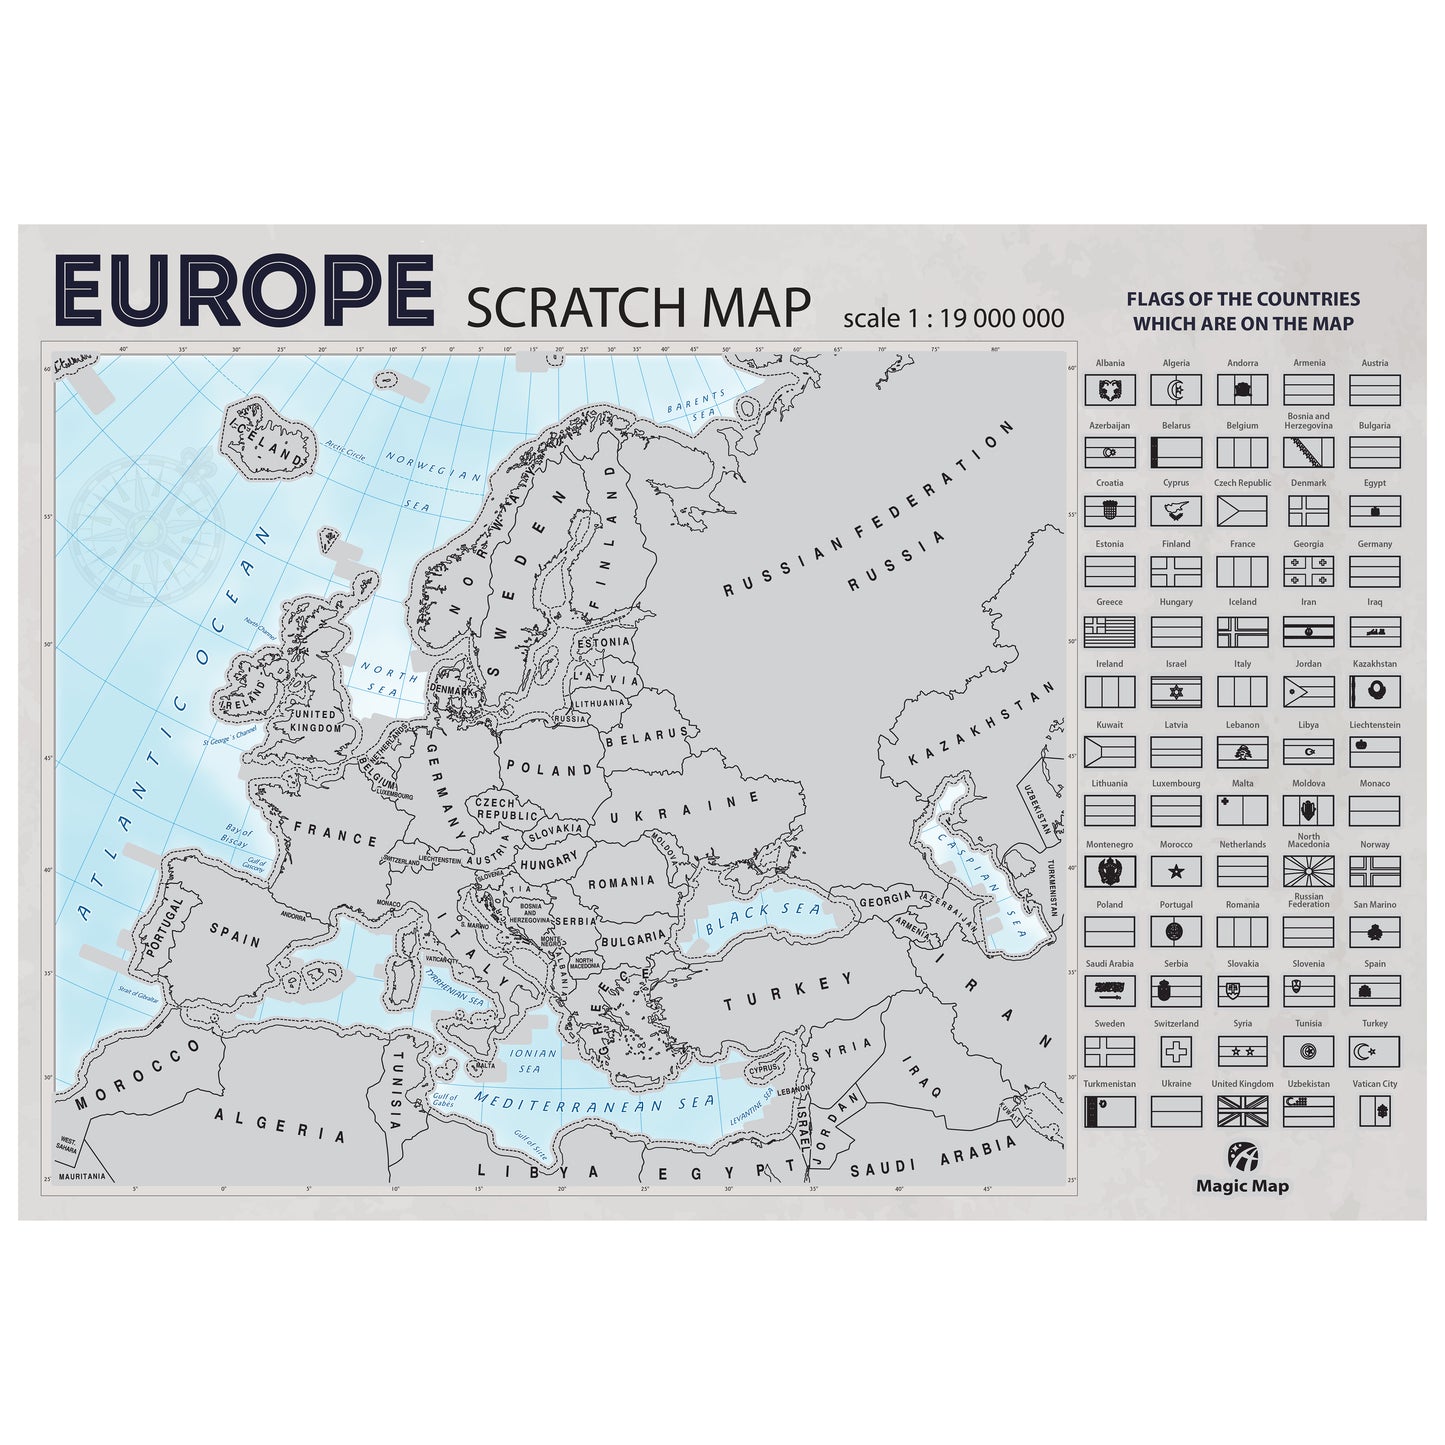 Europe scratch map english version